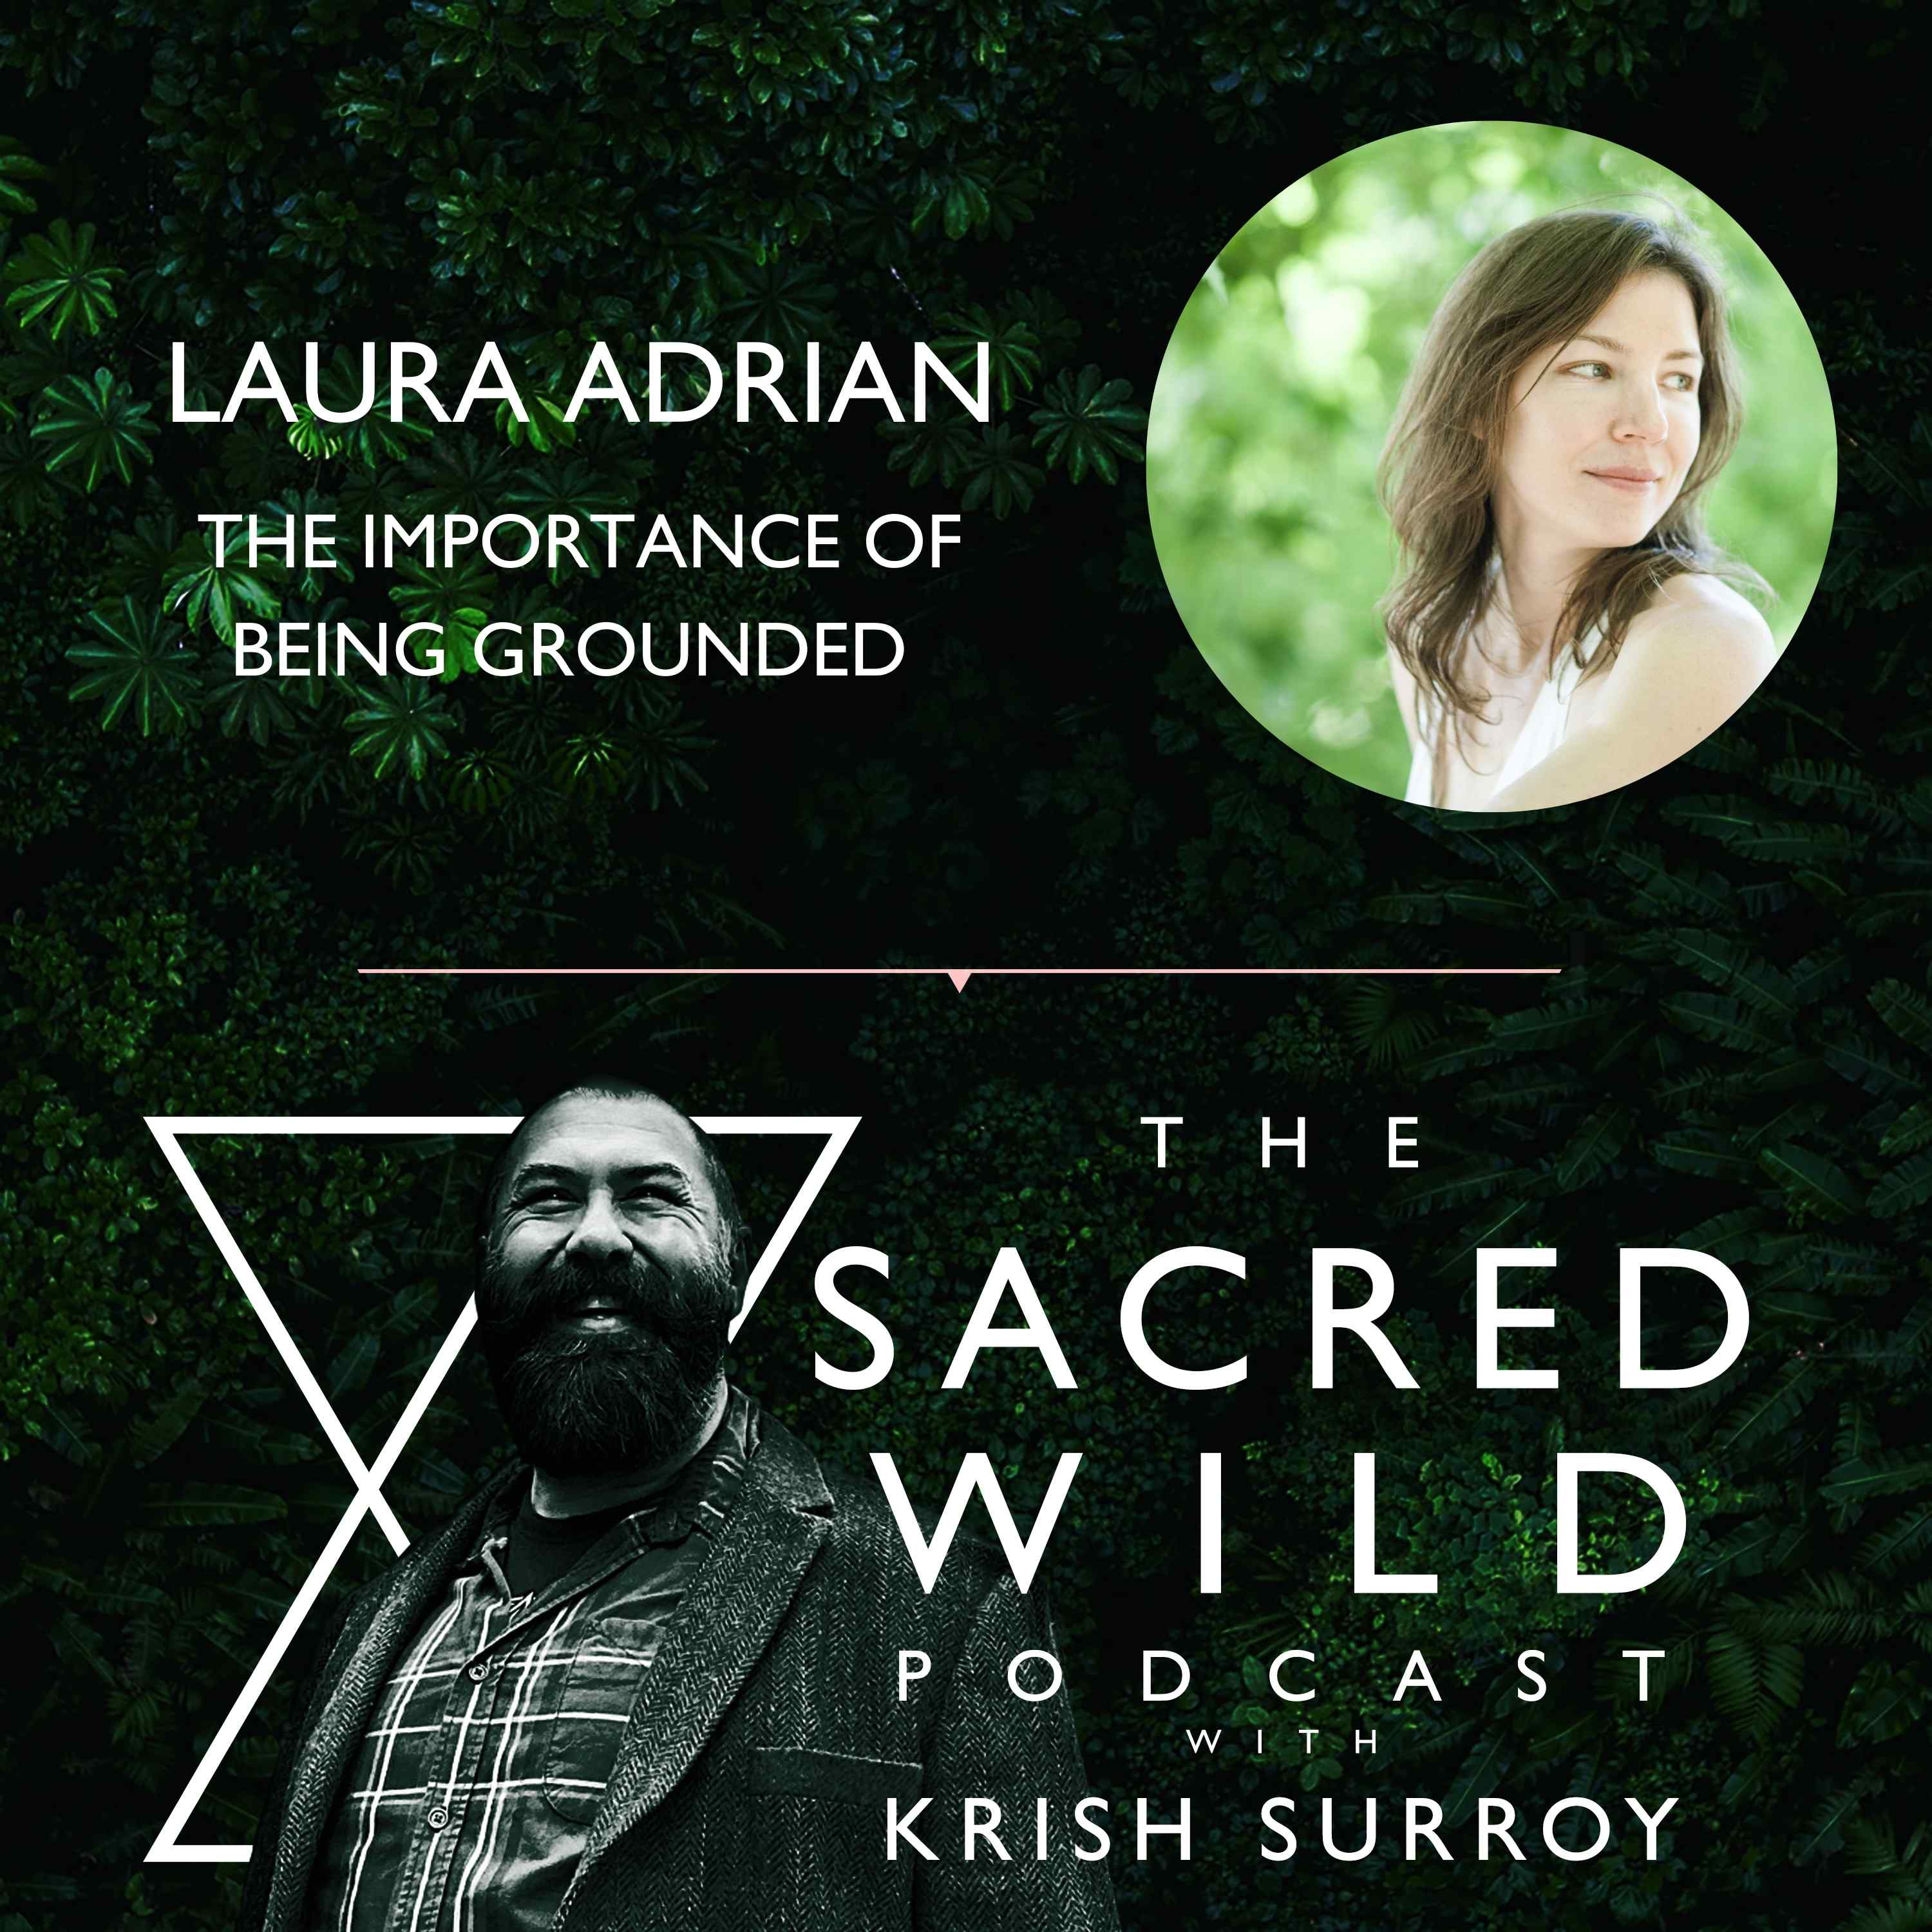 Artwork for podcast The Sacred Wild Podcast